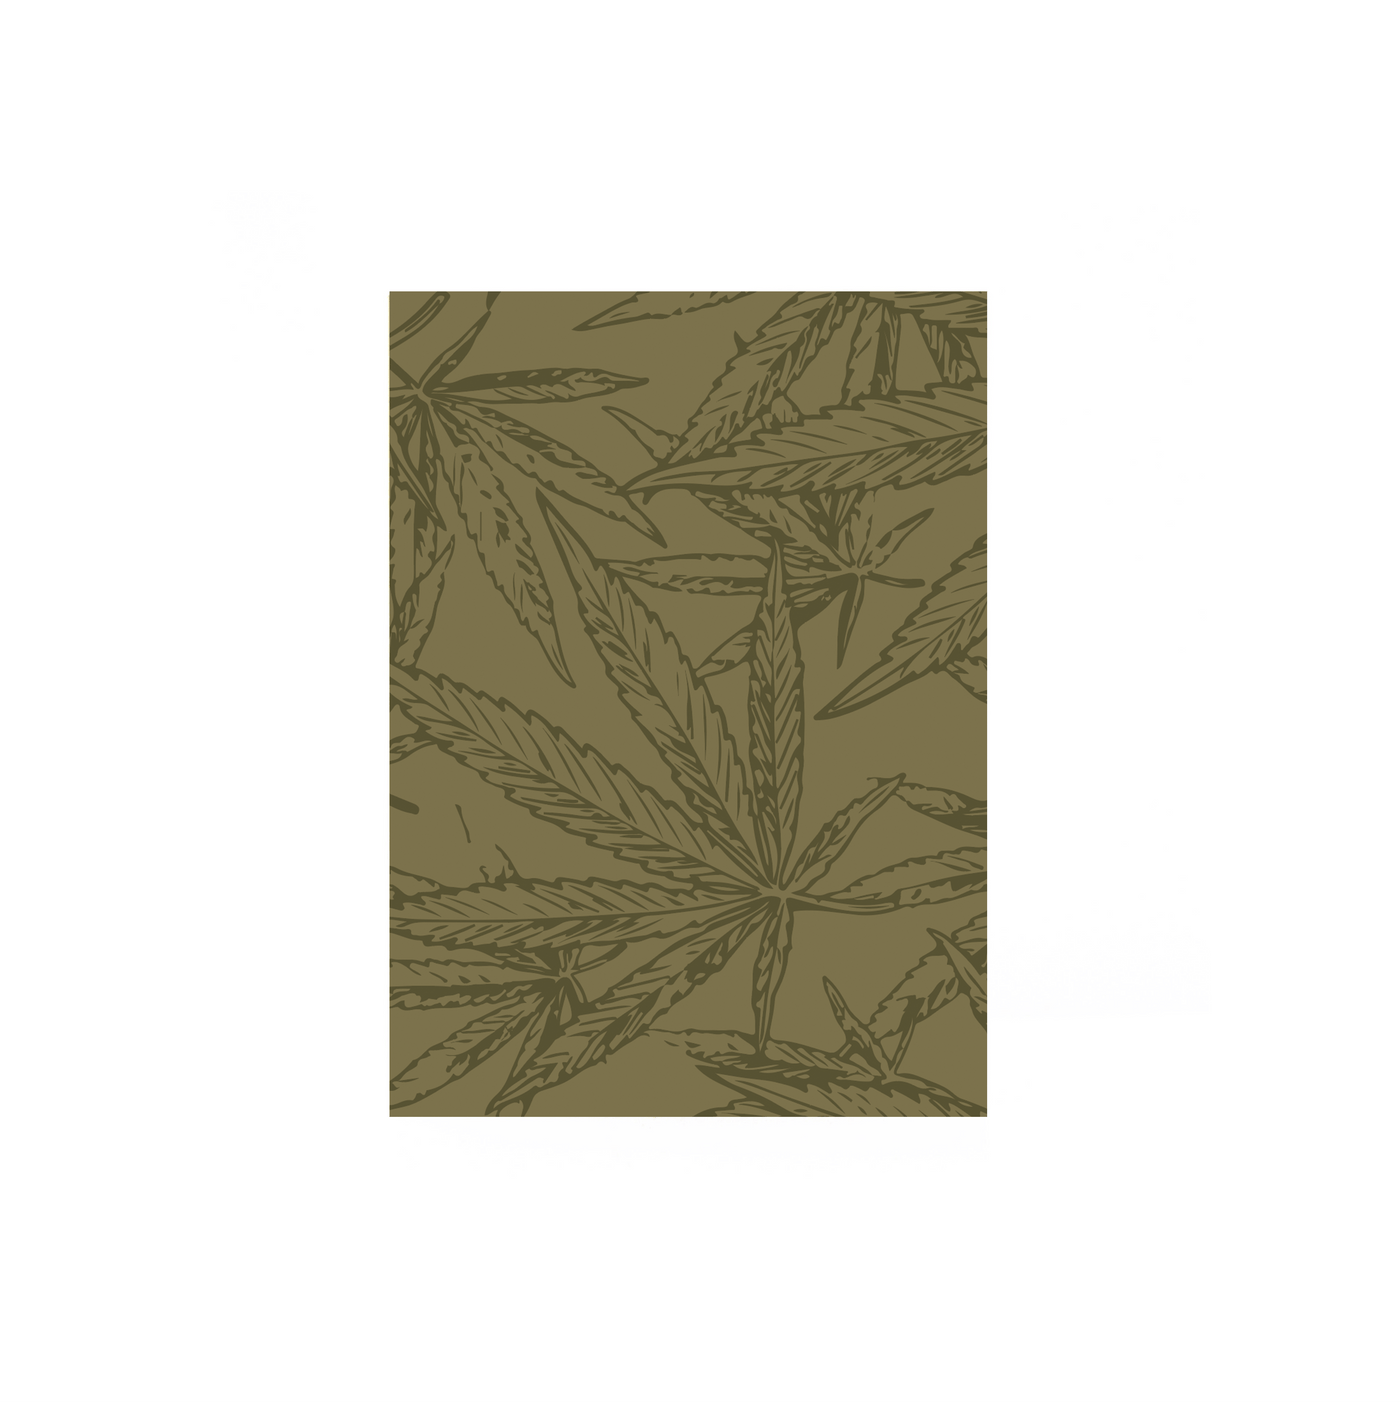 green happy holidaze card with marijuana leaf illustrations